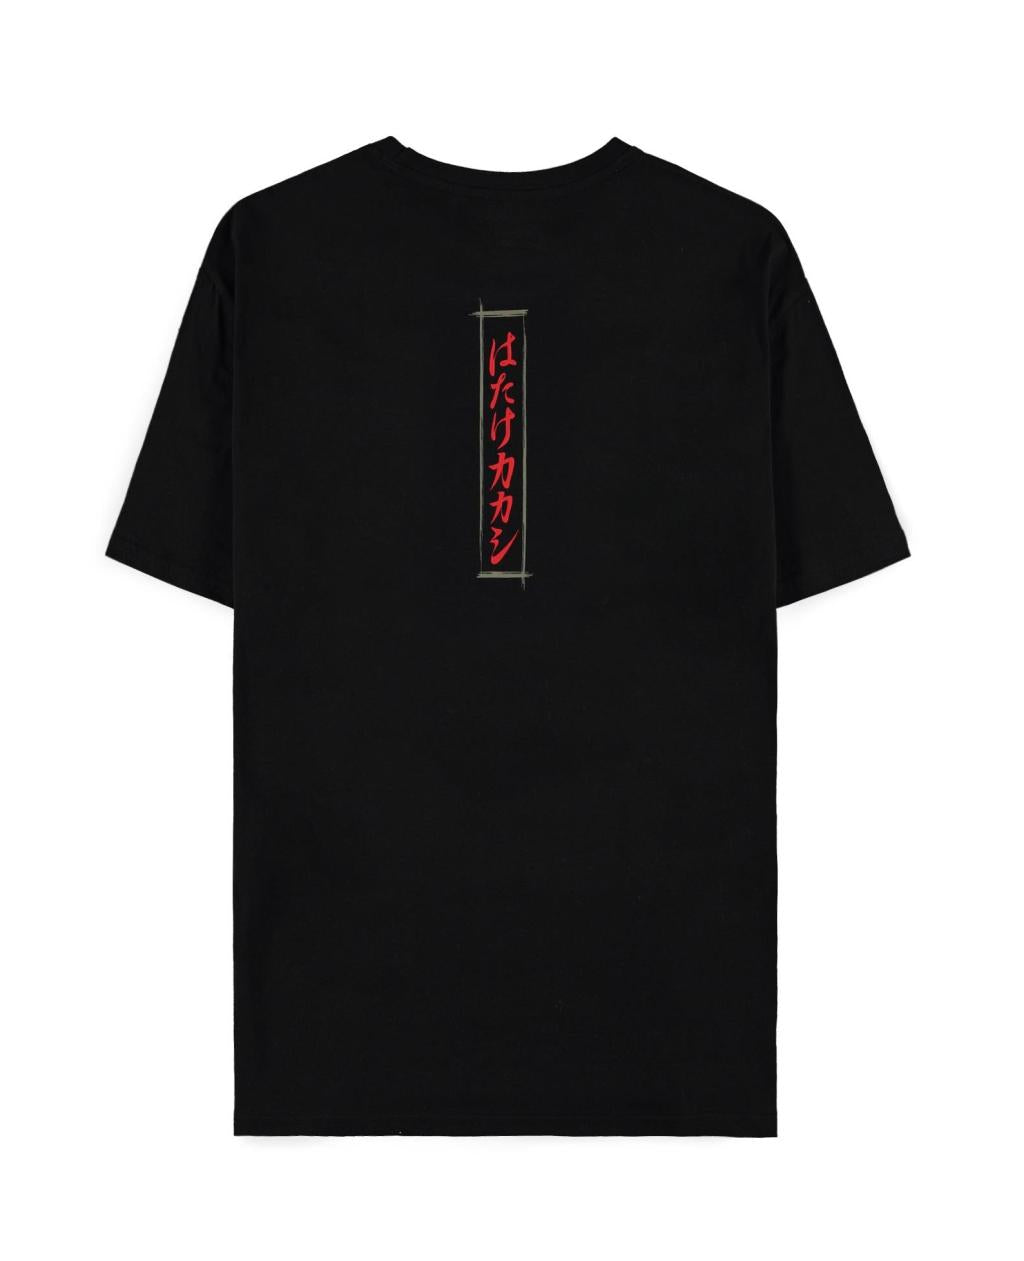 NARUTO Shippuden - Kakashi Line Art - Men's T-shirt (XS)